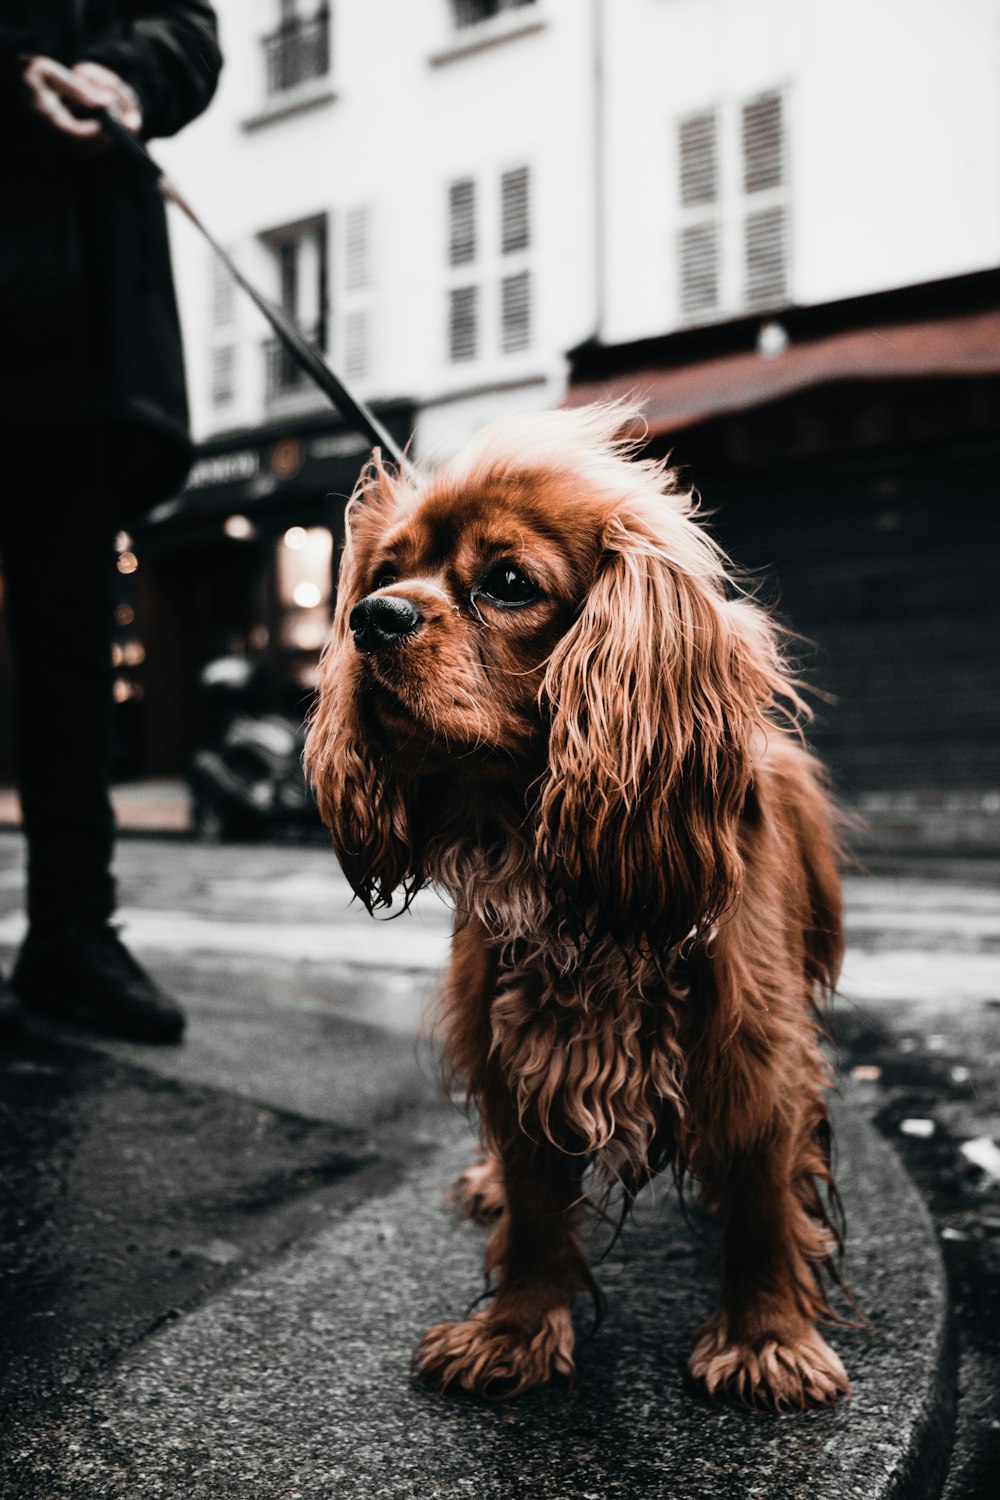 Cane marrone a pelo lungo sulla strada